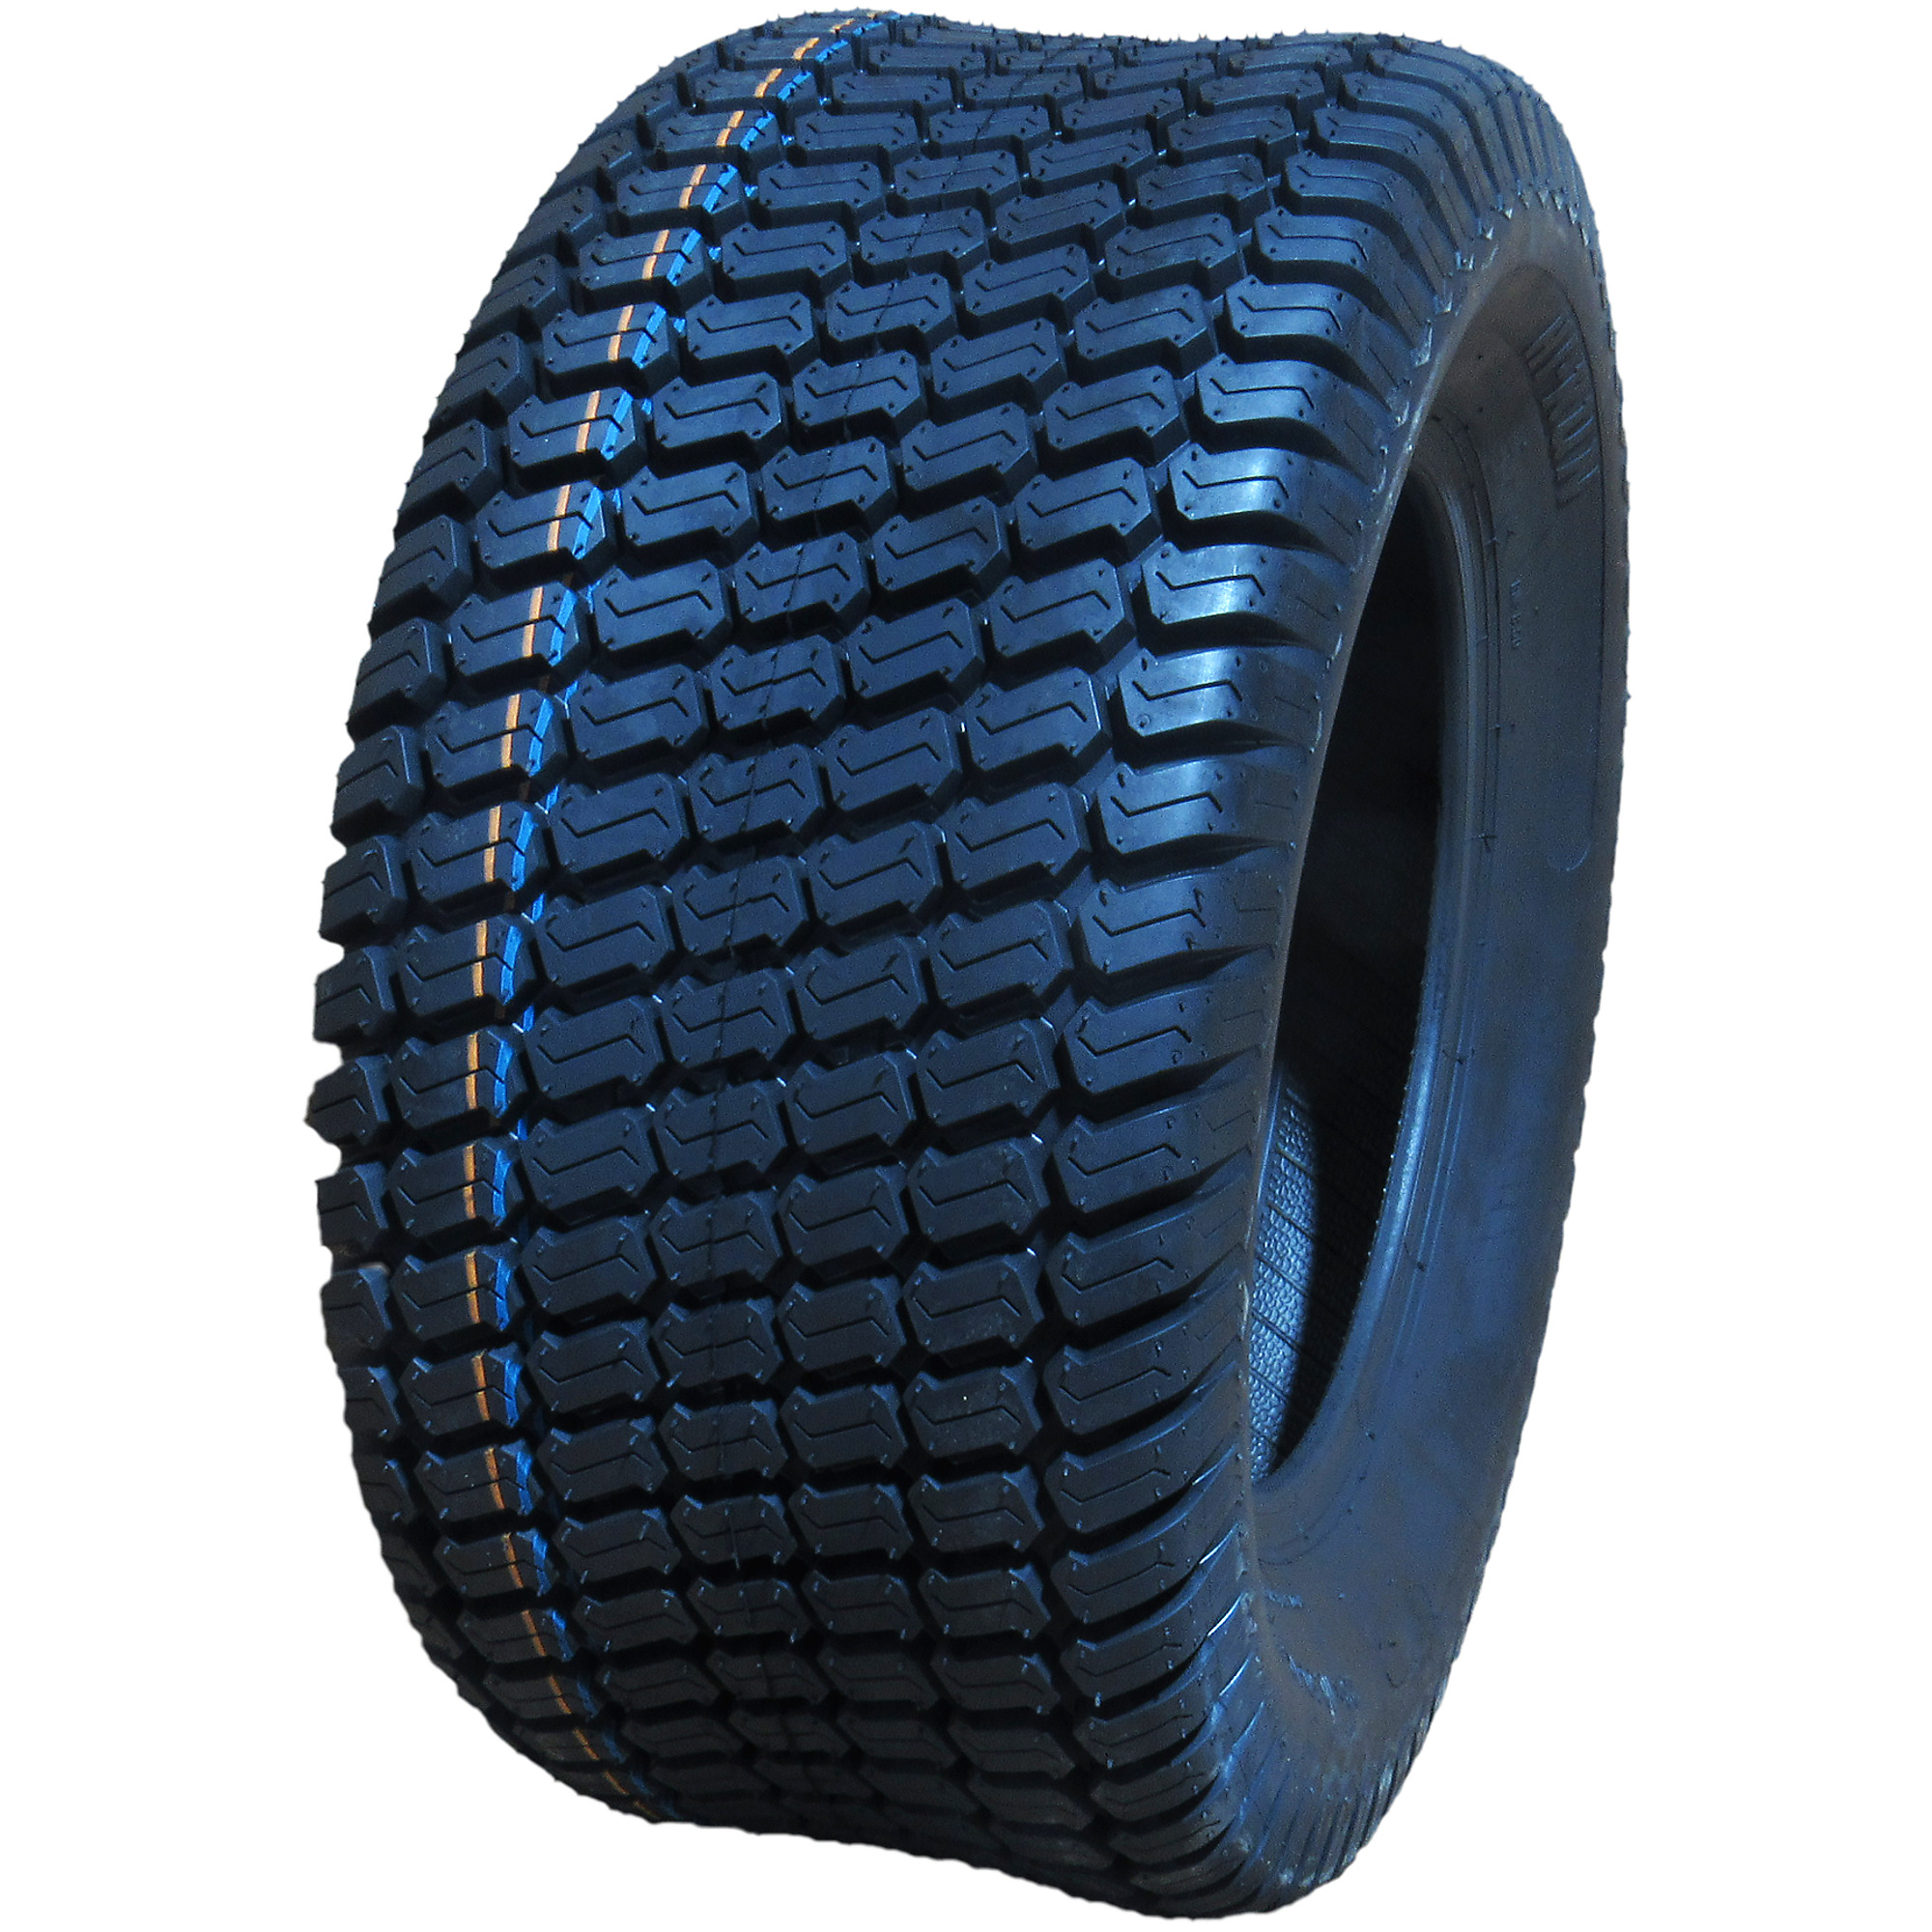 HI-RUN, Lawn Garden Tire, SU05 Turf, Tire Size 23X10.50-12 Load Range Rating B, Model WD1044